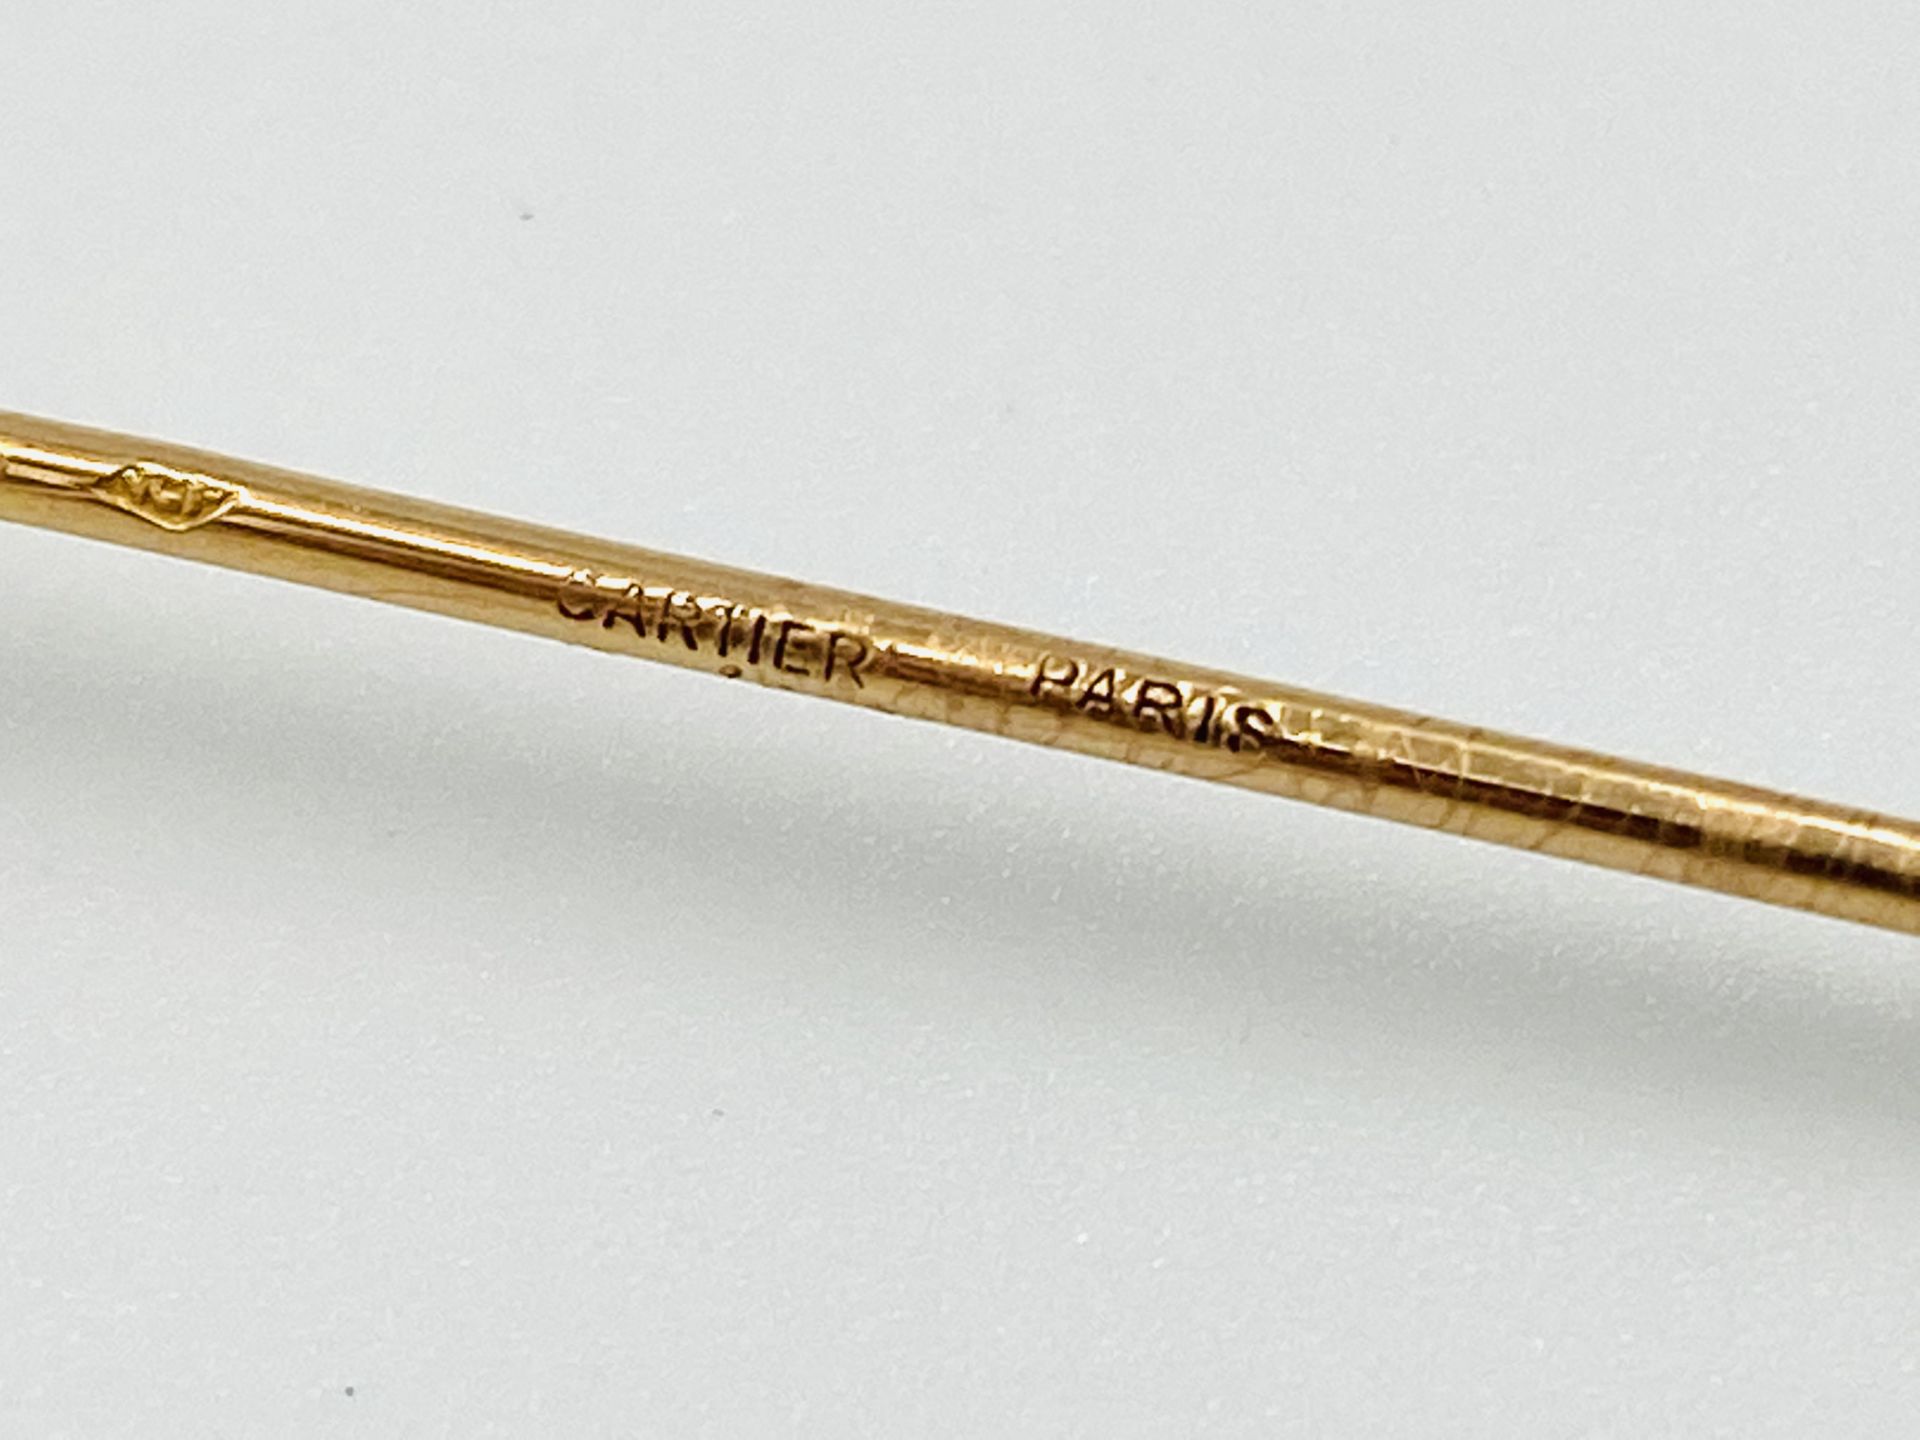 Cartier Paris, gold, onyx and diamond stick pin - Image 3 of 3